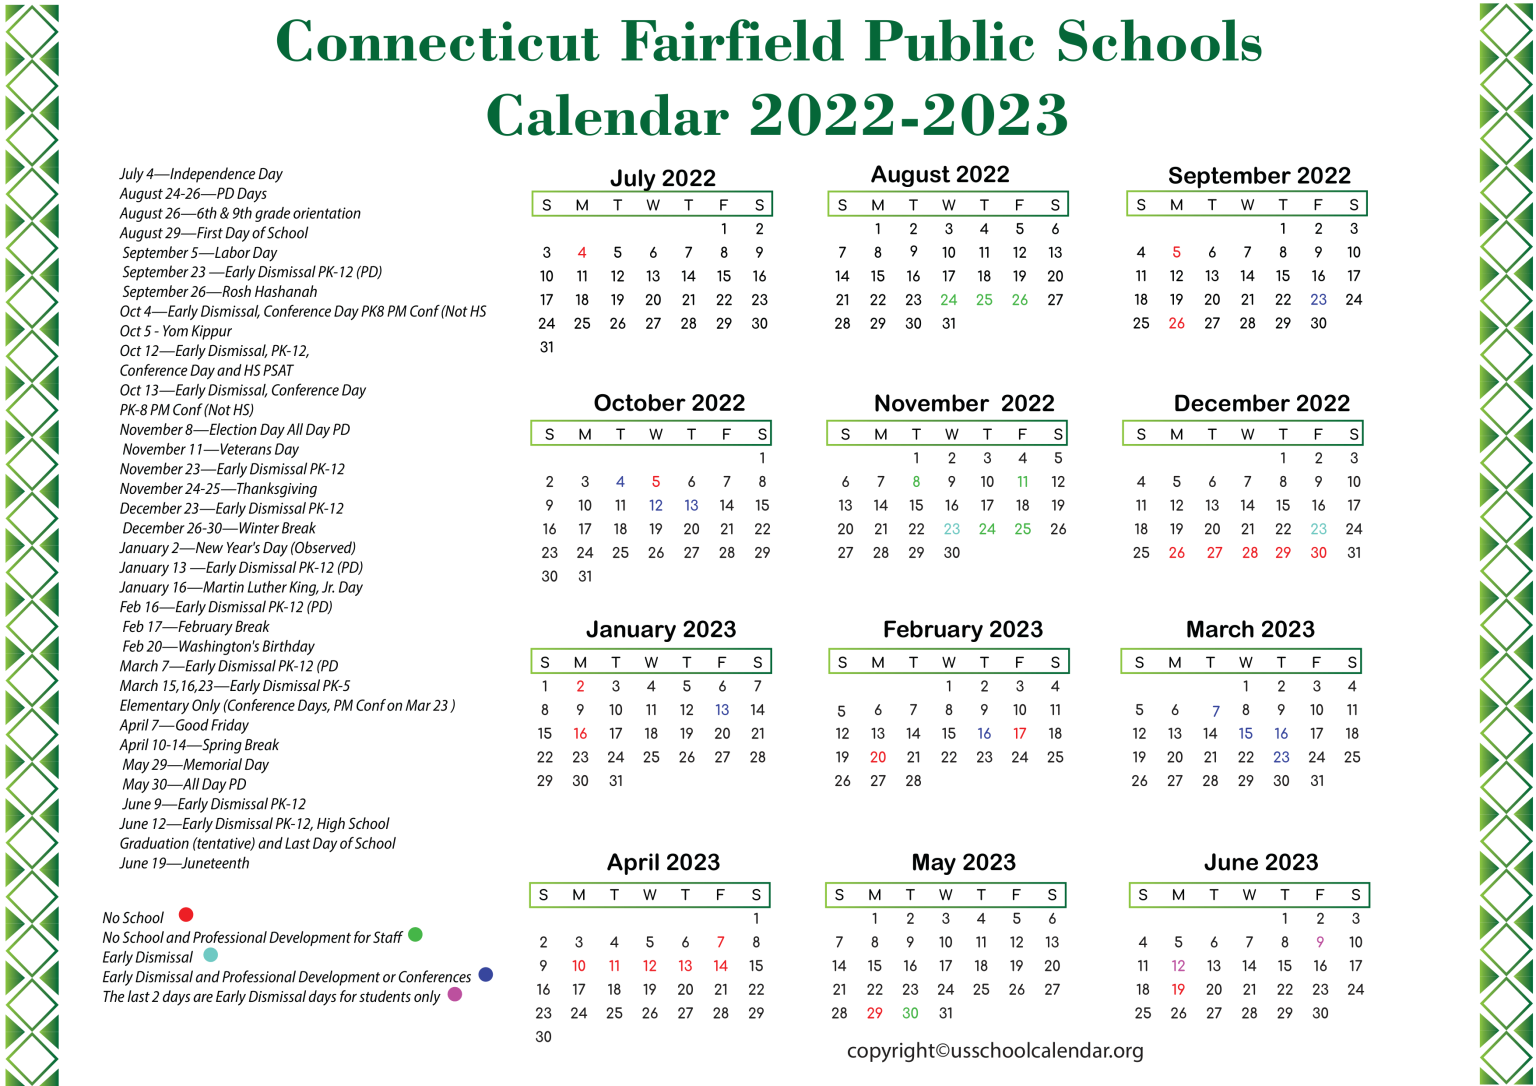 Connecticut Fairfield Public Schools Calendar 2023